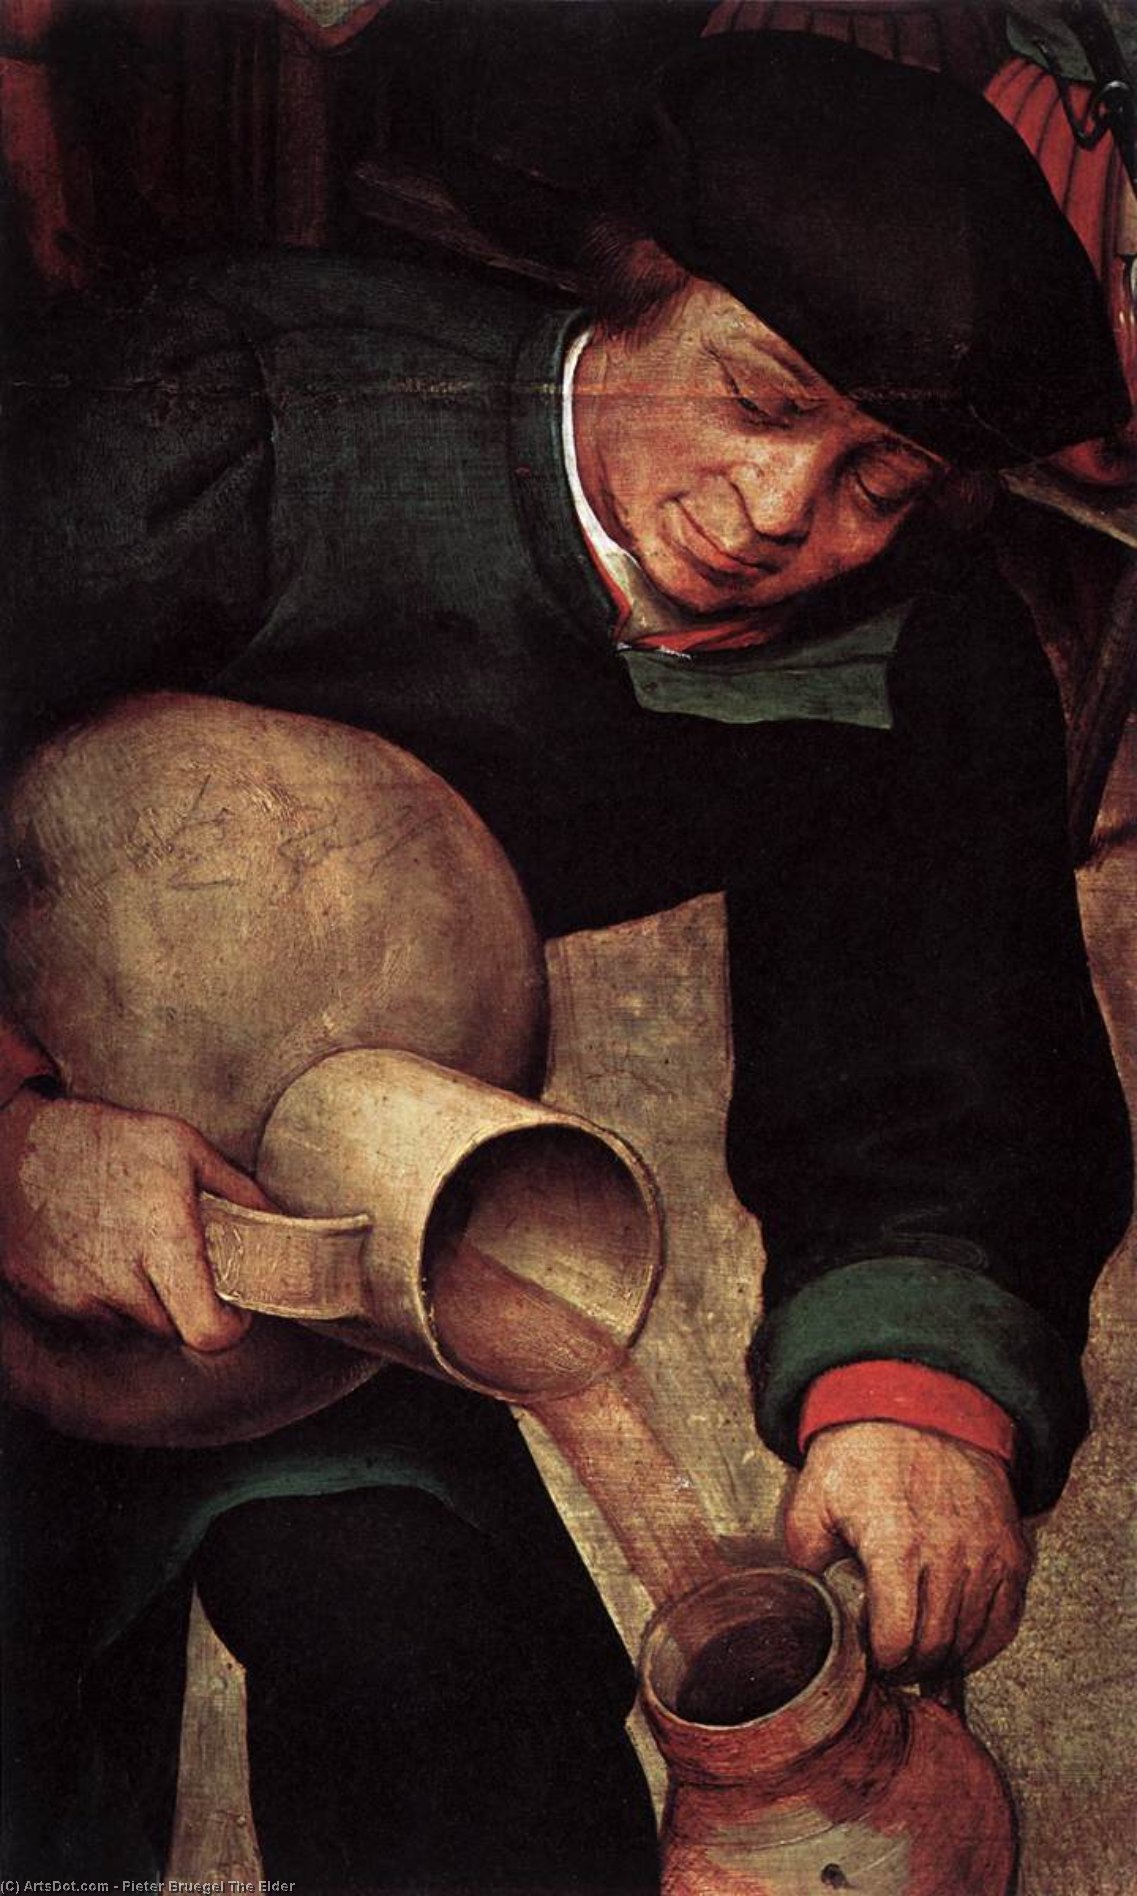 Wikioo.org - The Encyclopedia of Fine Arts - Painting, Artwork by Pieter Bruegel The Elder - Peasant Wedding (detail)